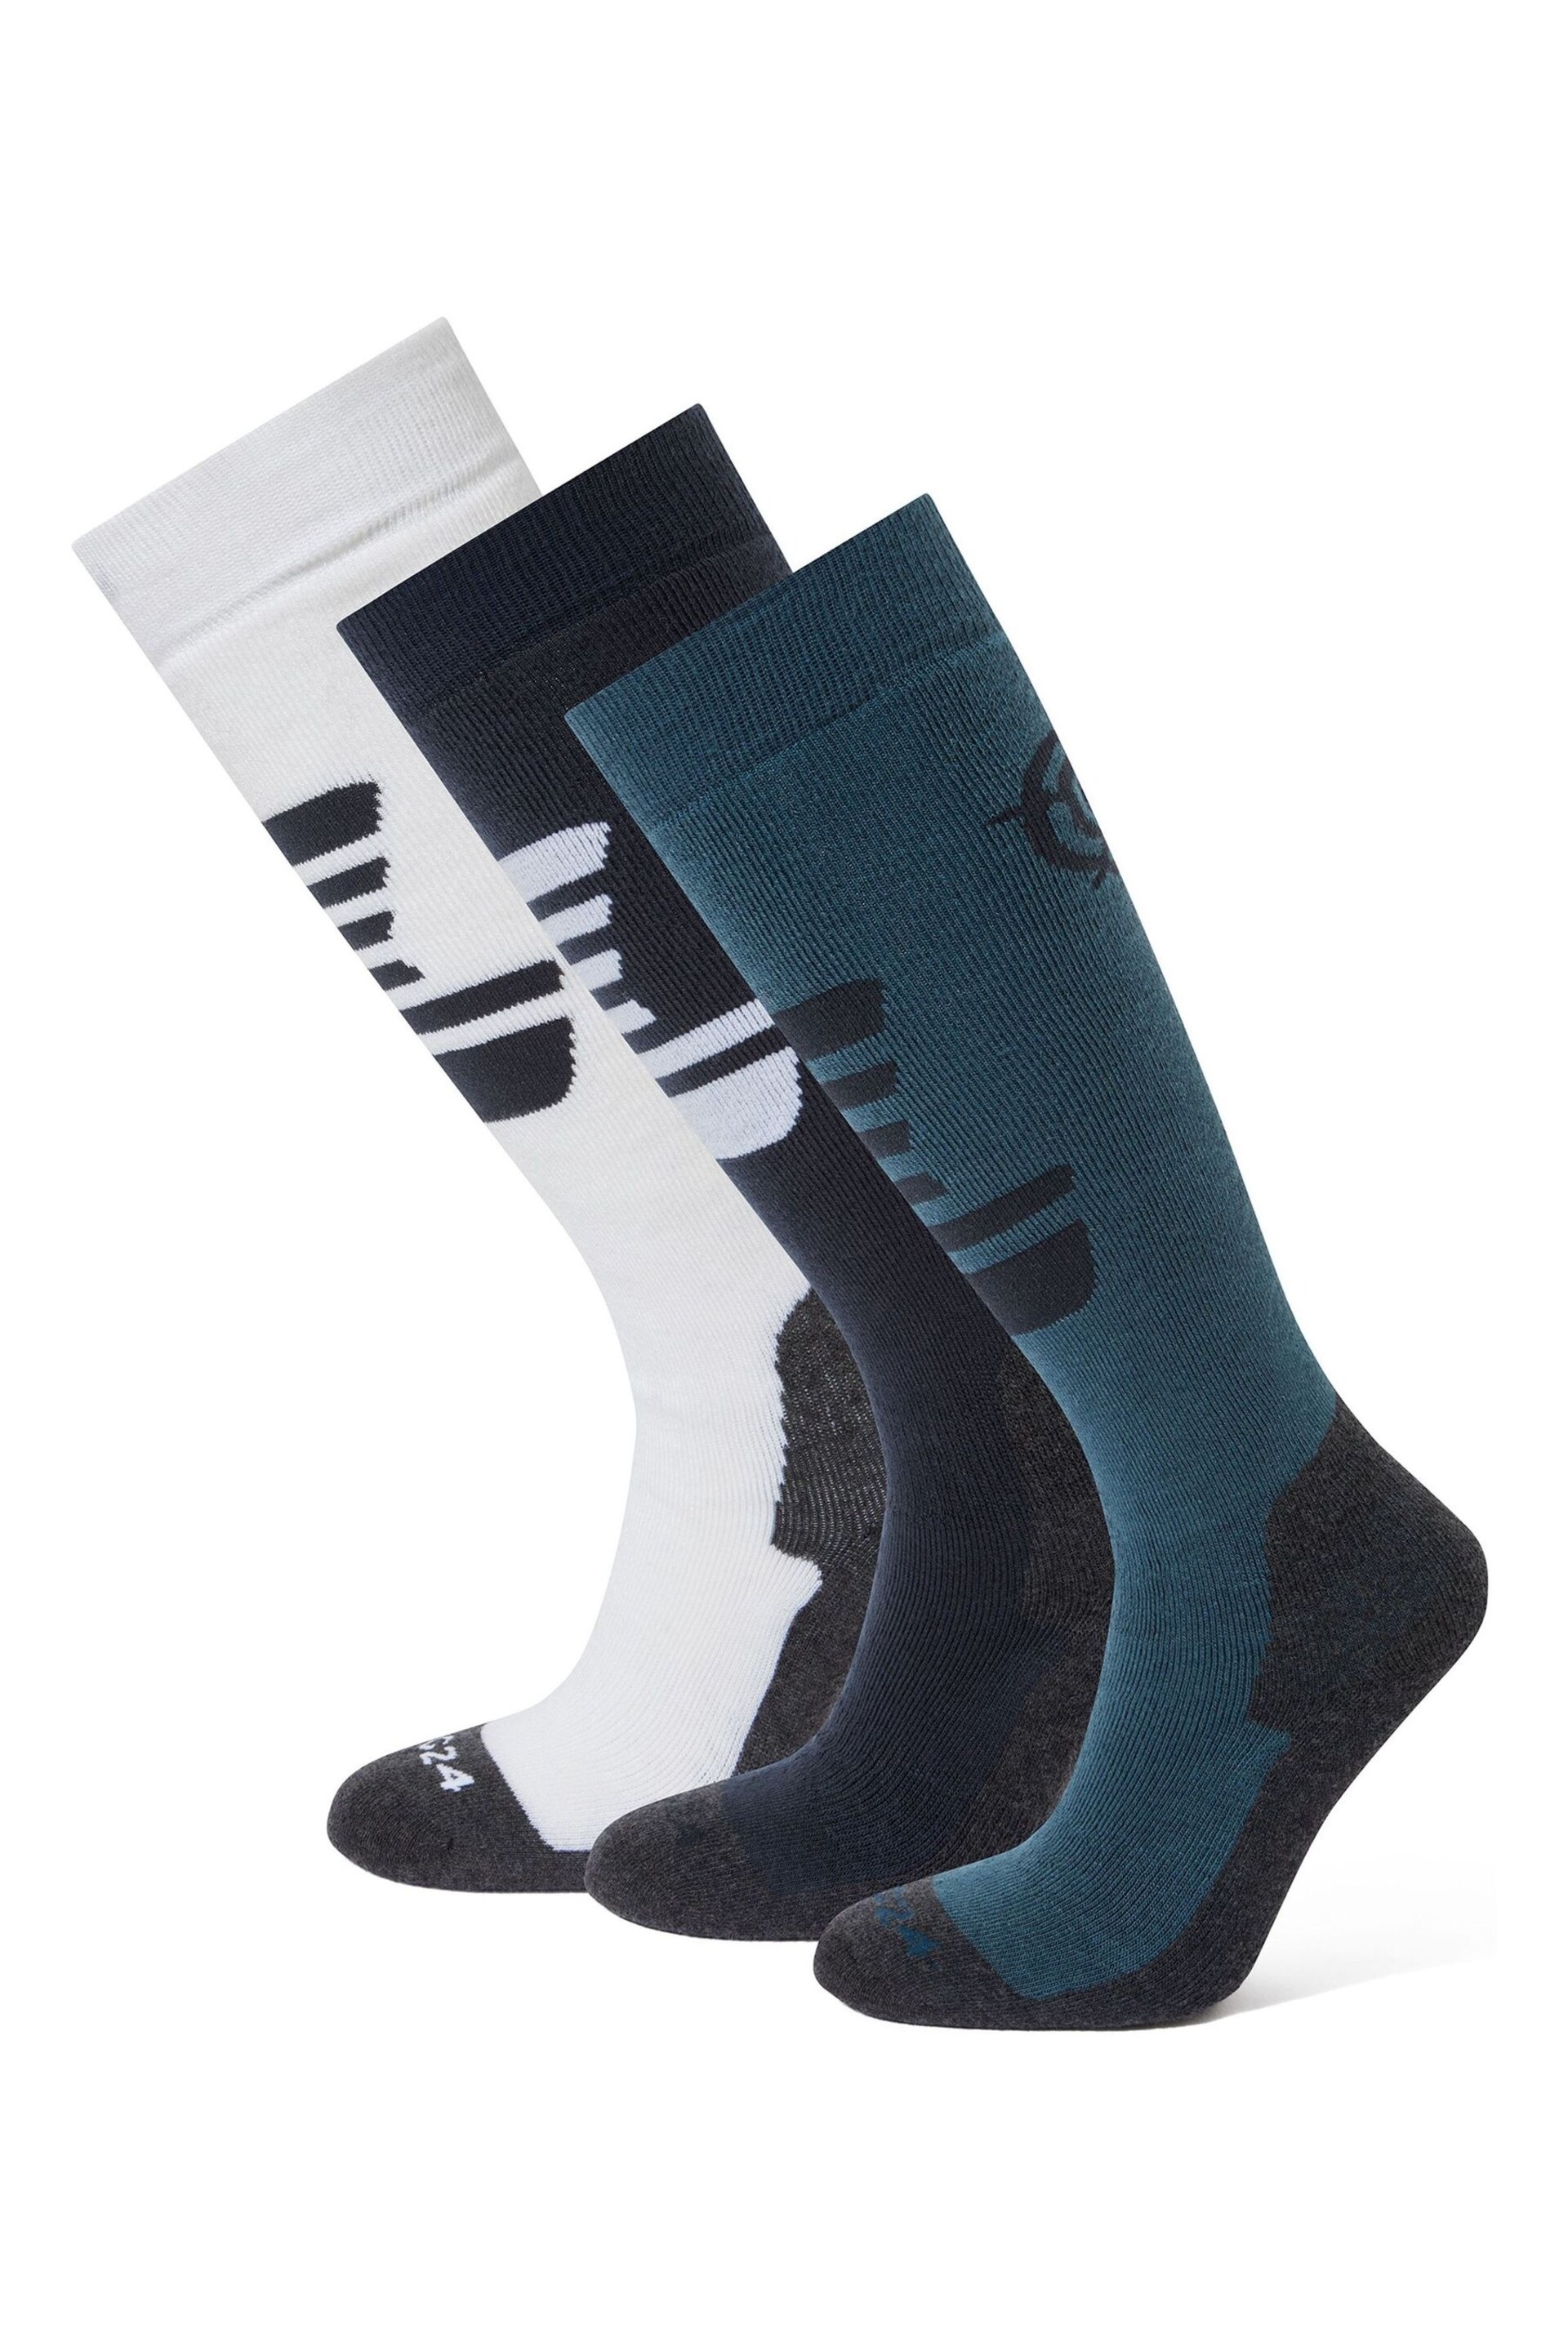 Tog 24 Blue Bergenz Ski Socks - Image 1 of 2